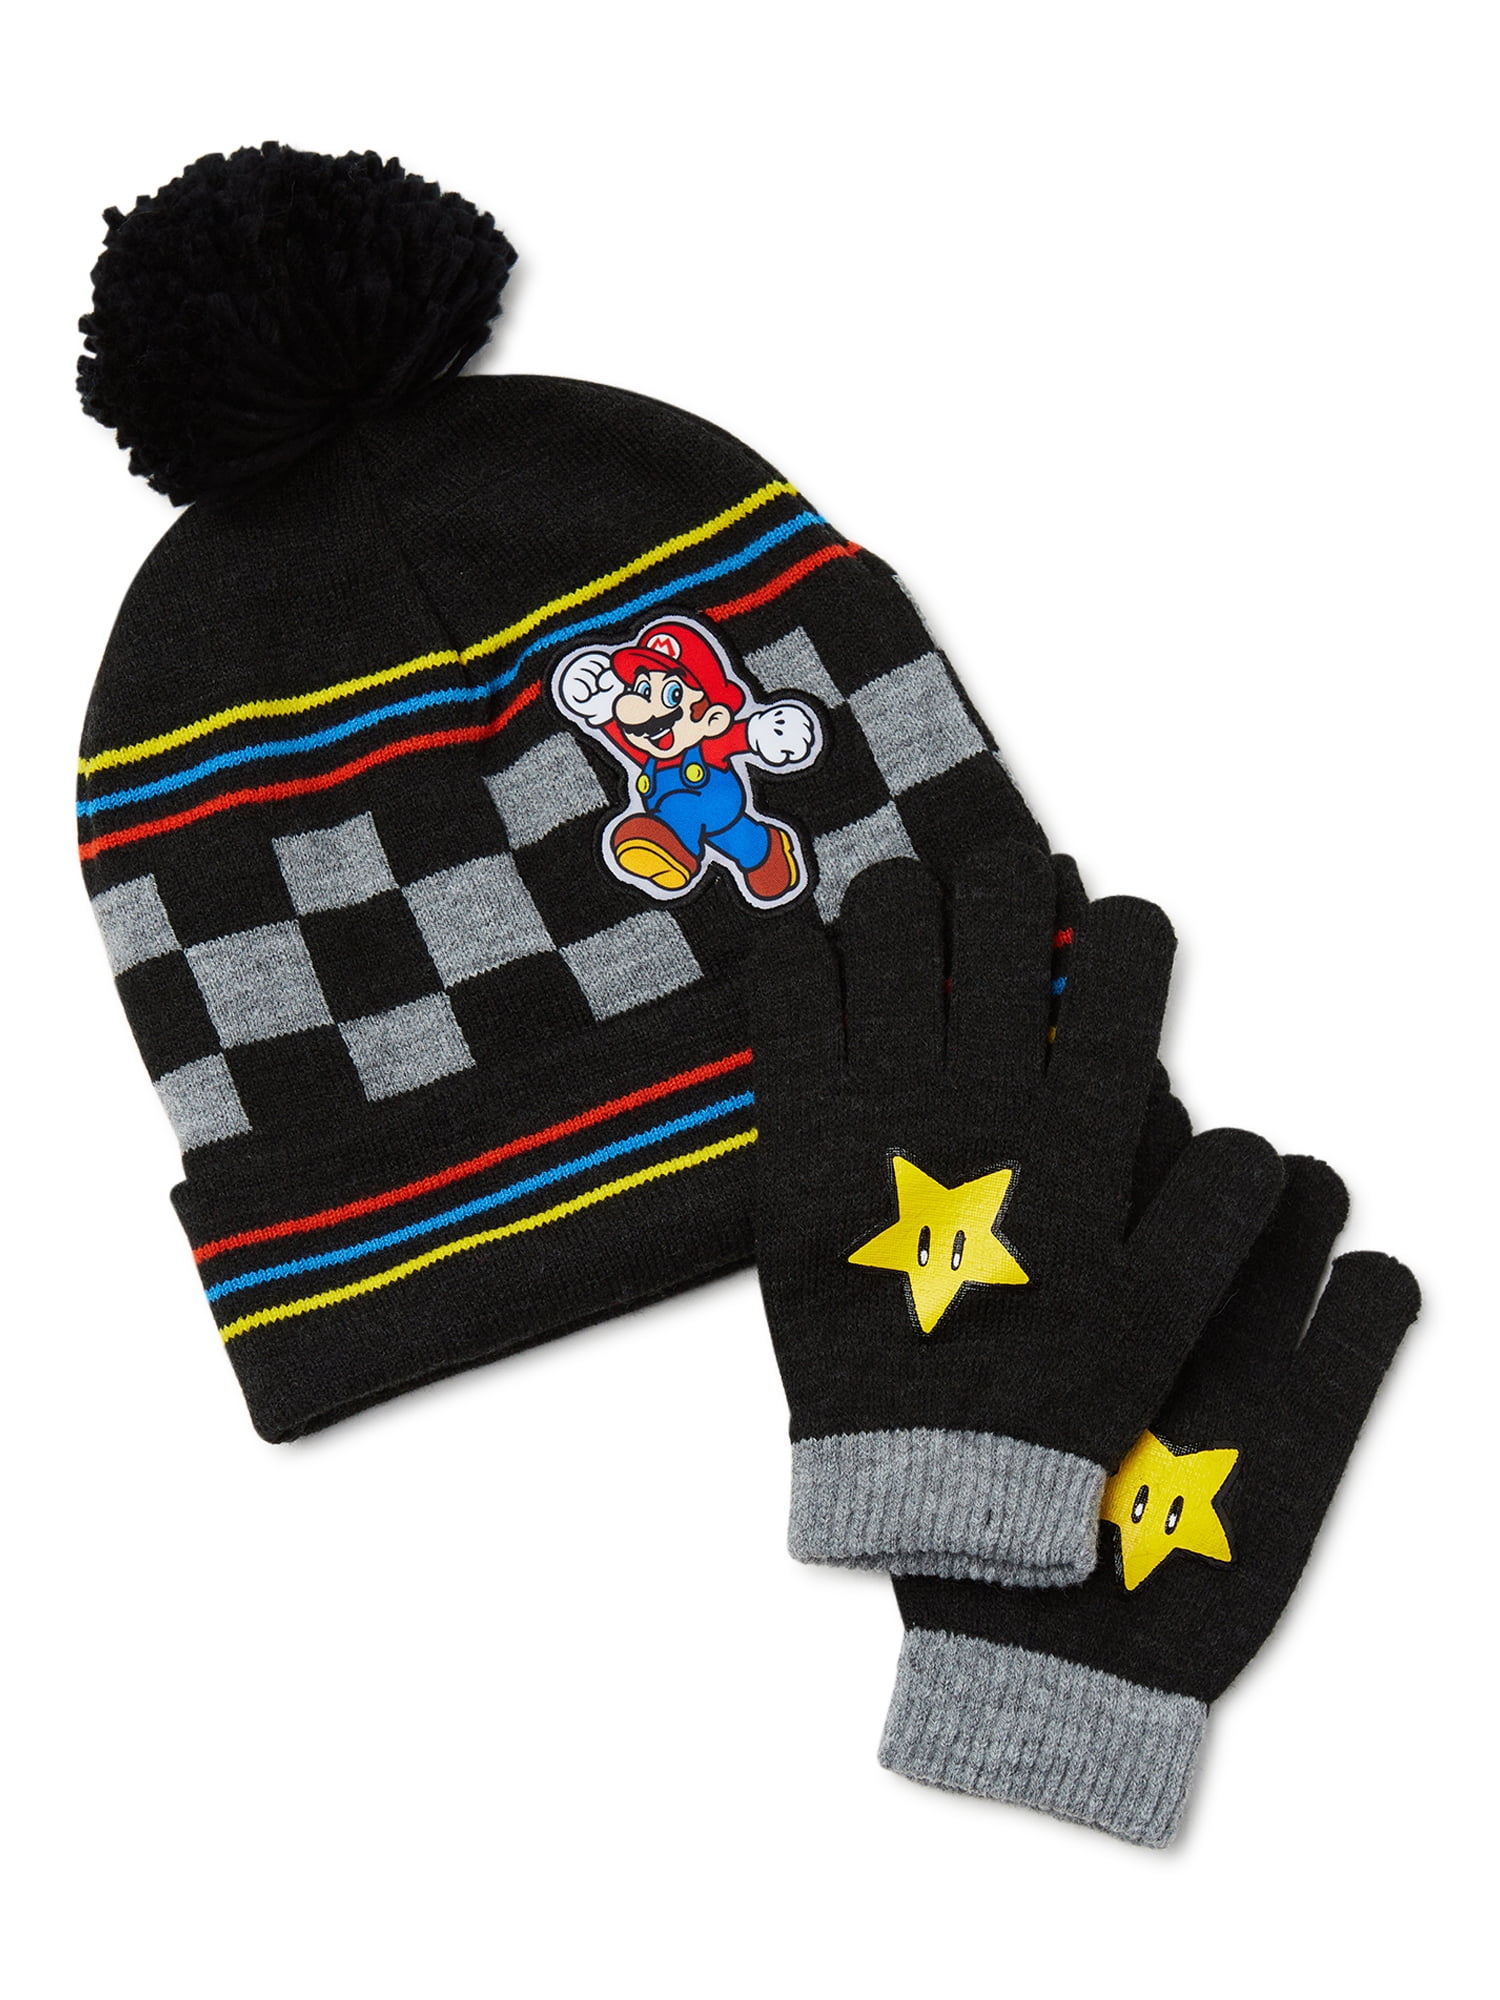 Nintendo Super Mario Boys Pom Beanie with Matching Gloves, 2-Piece